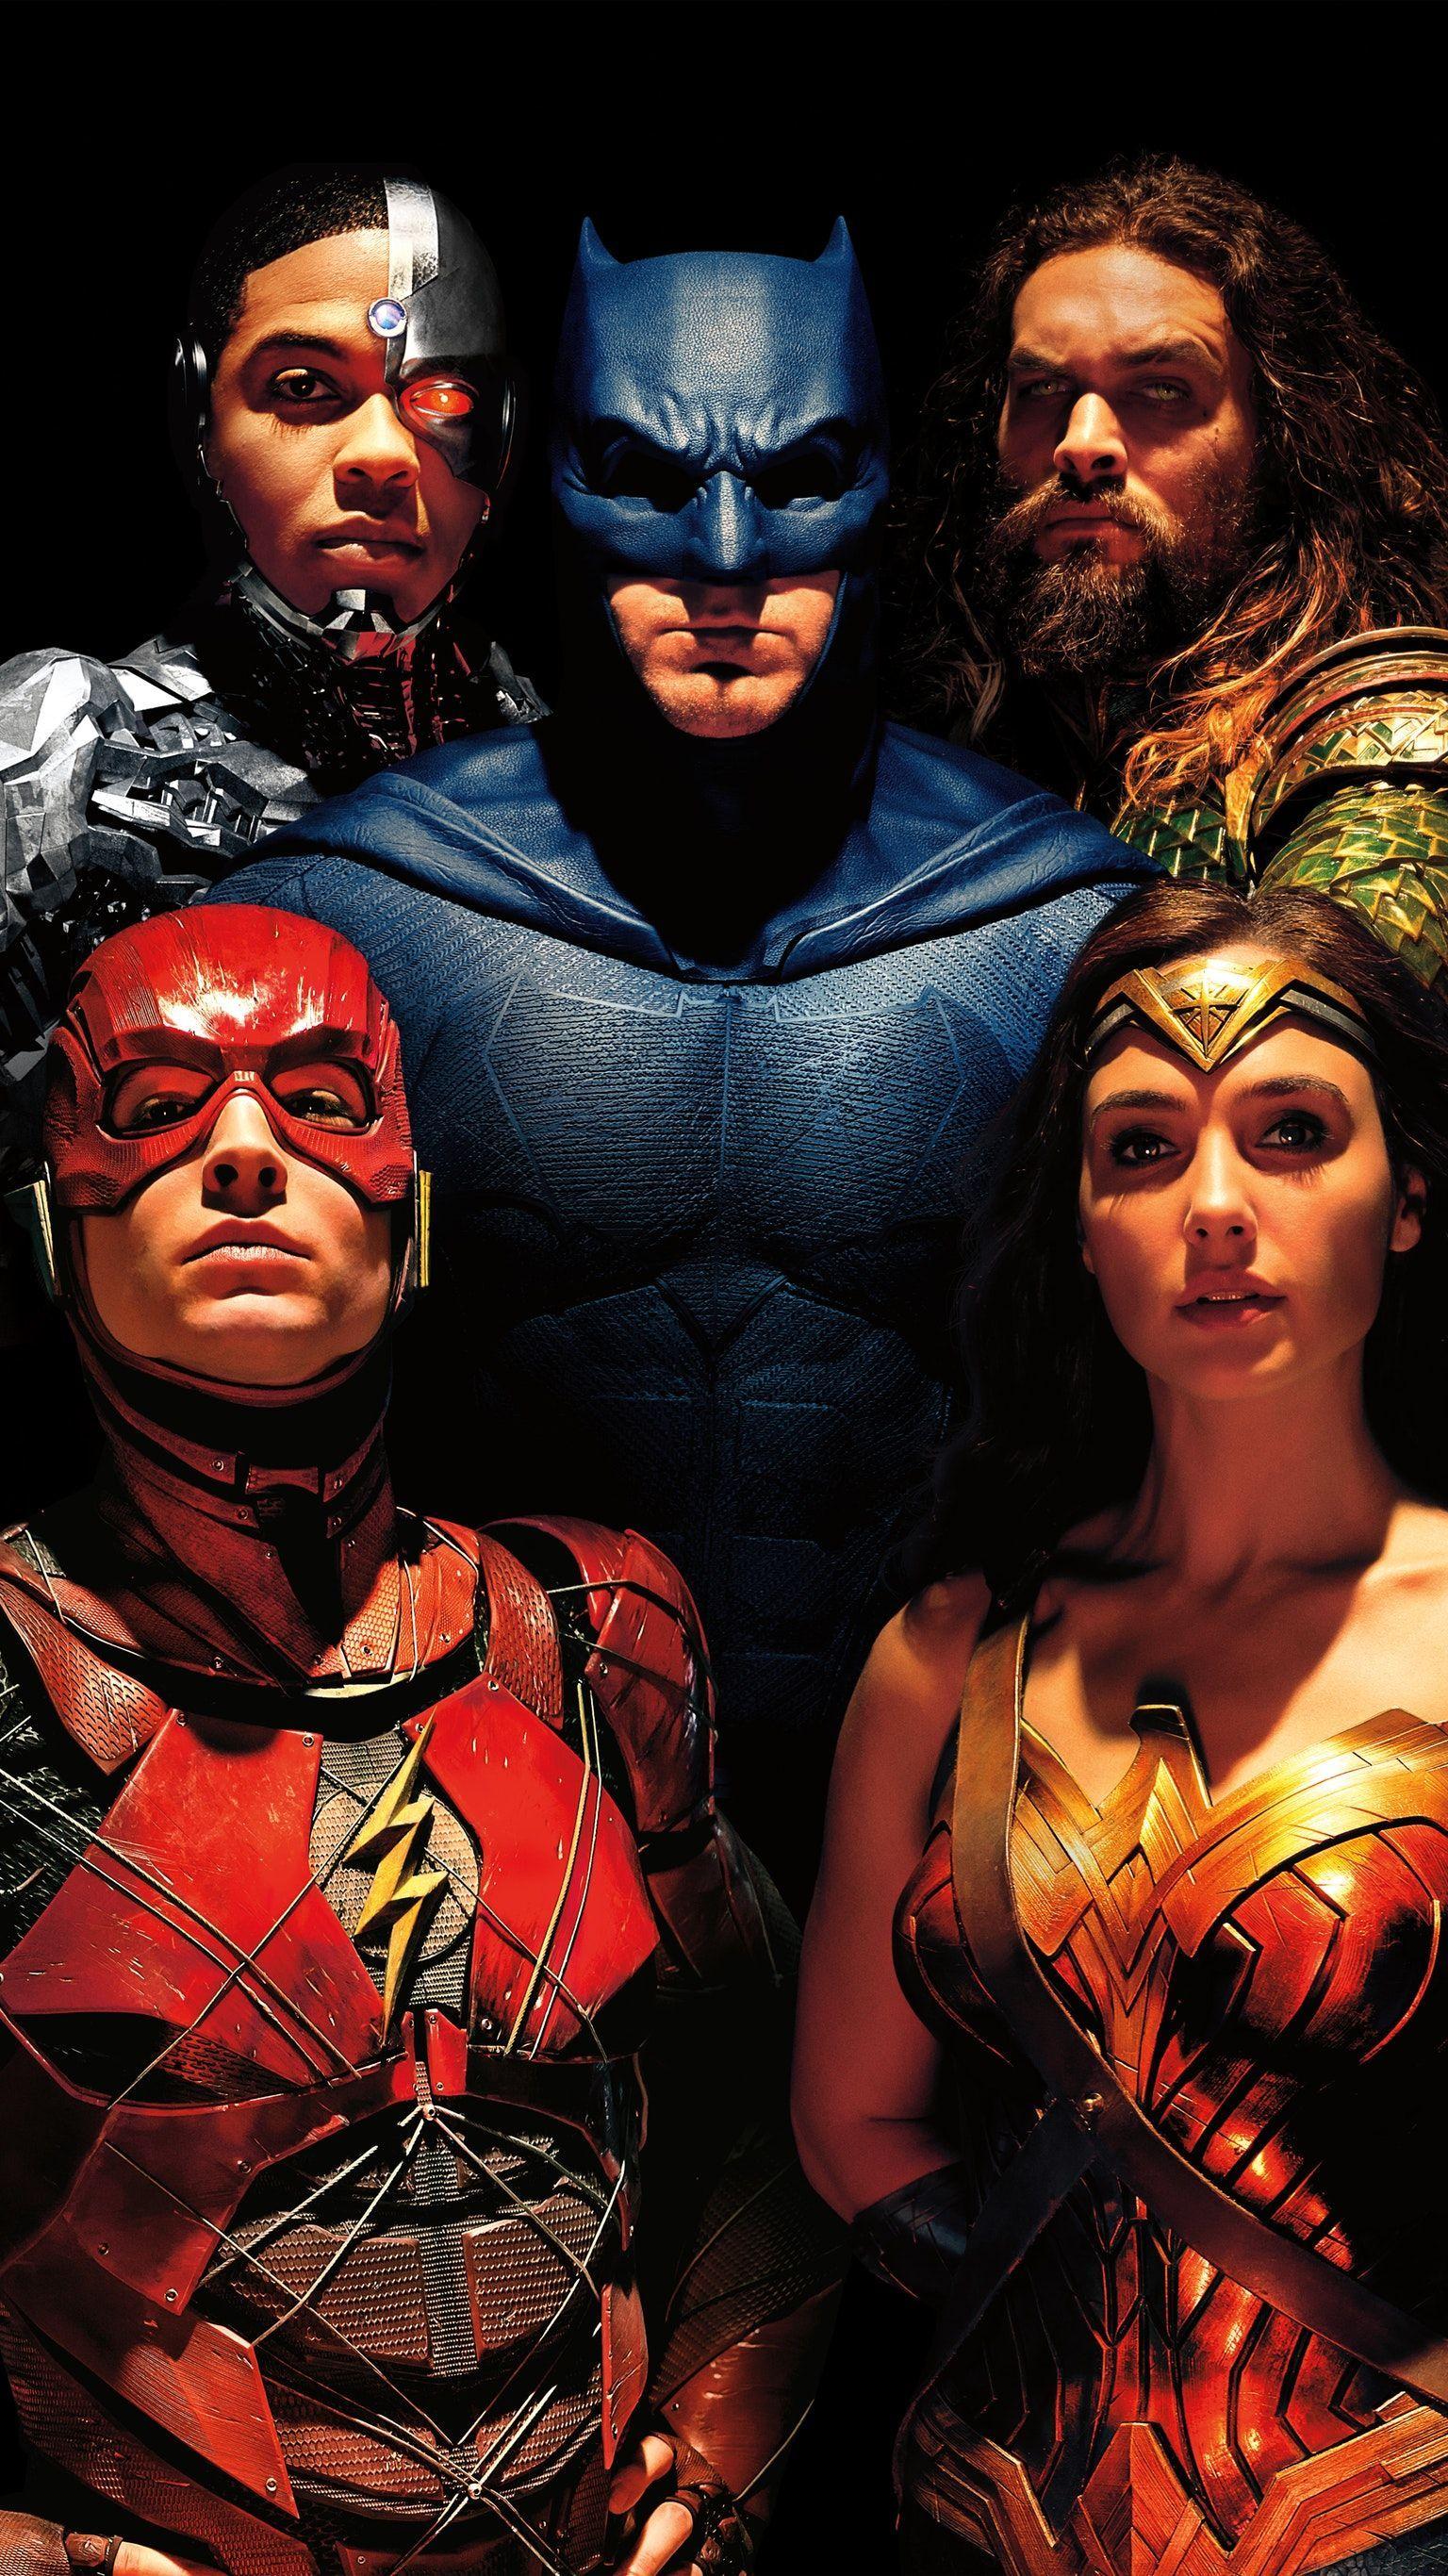 Justice League (2017) Phone Wallpaper. Moviemania. Justice league Justice league, Justice league full movie